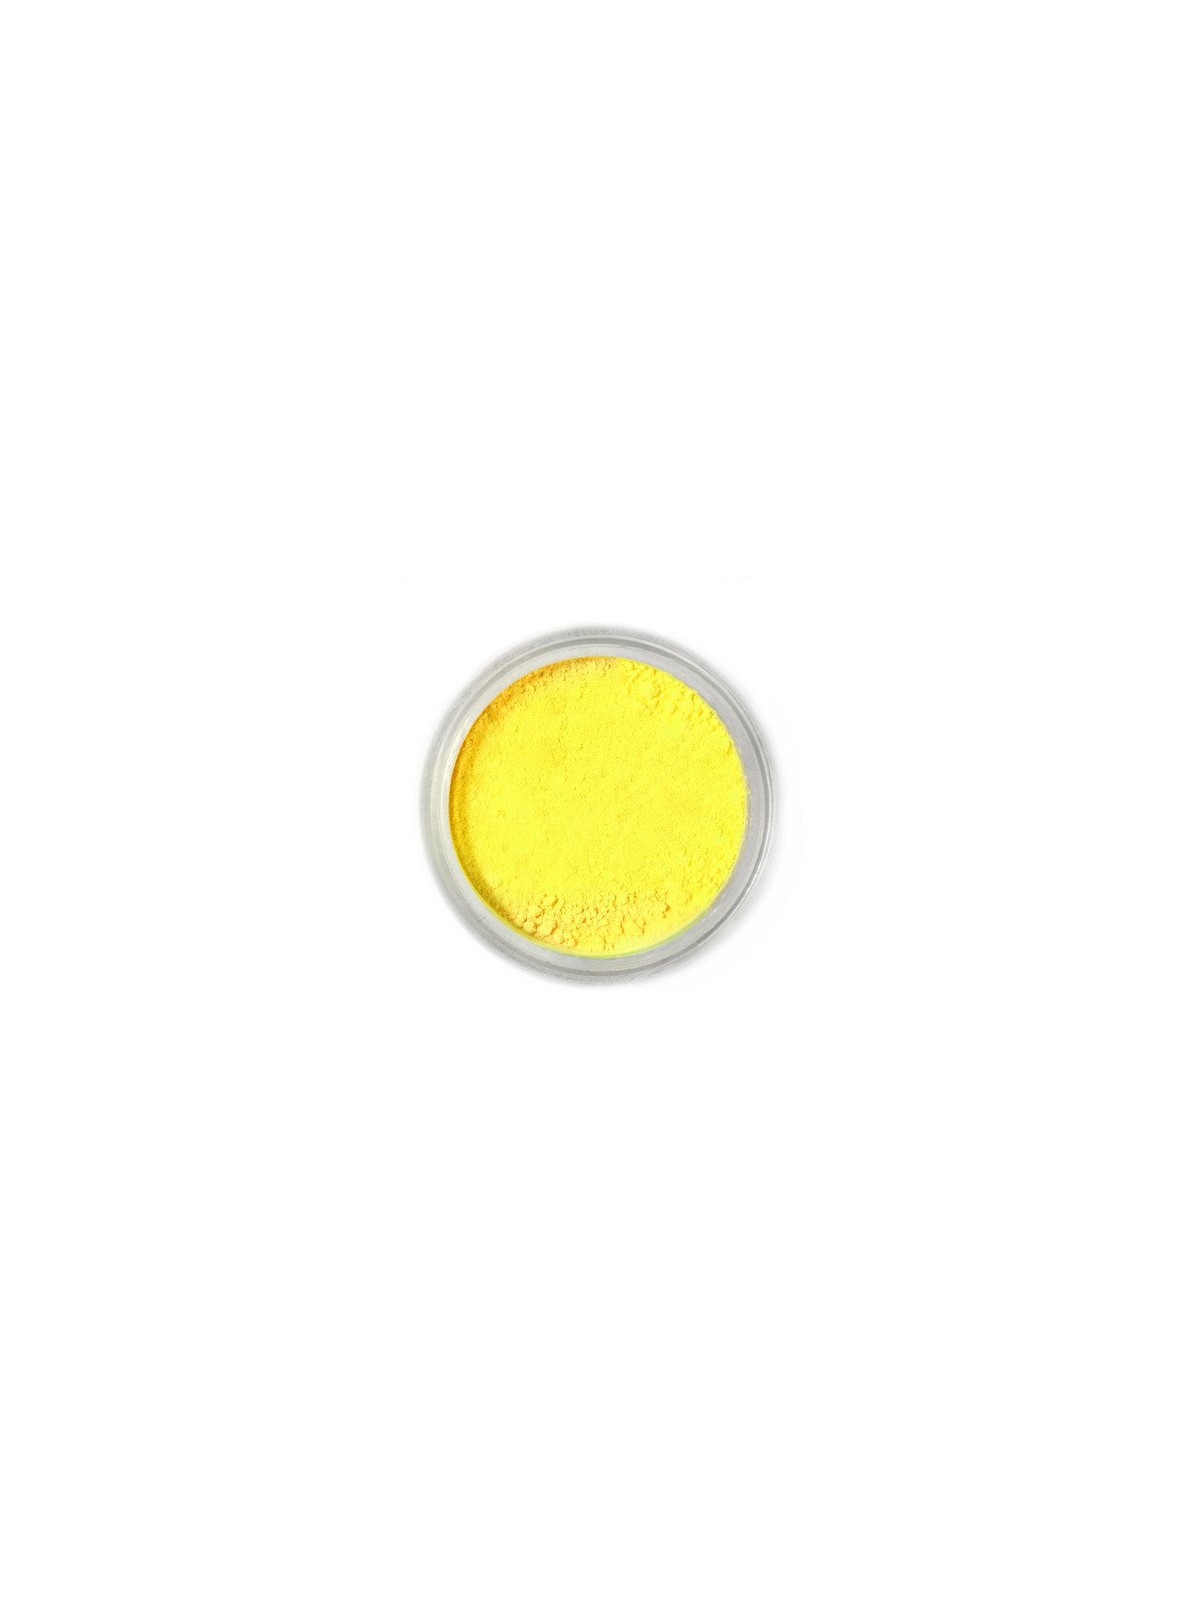 Jedlá prachová farba Fractal - Lemon Yellow, Citromsárga (3 g)